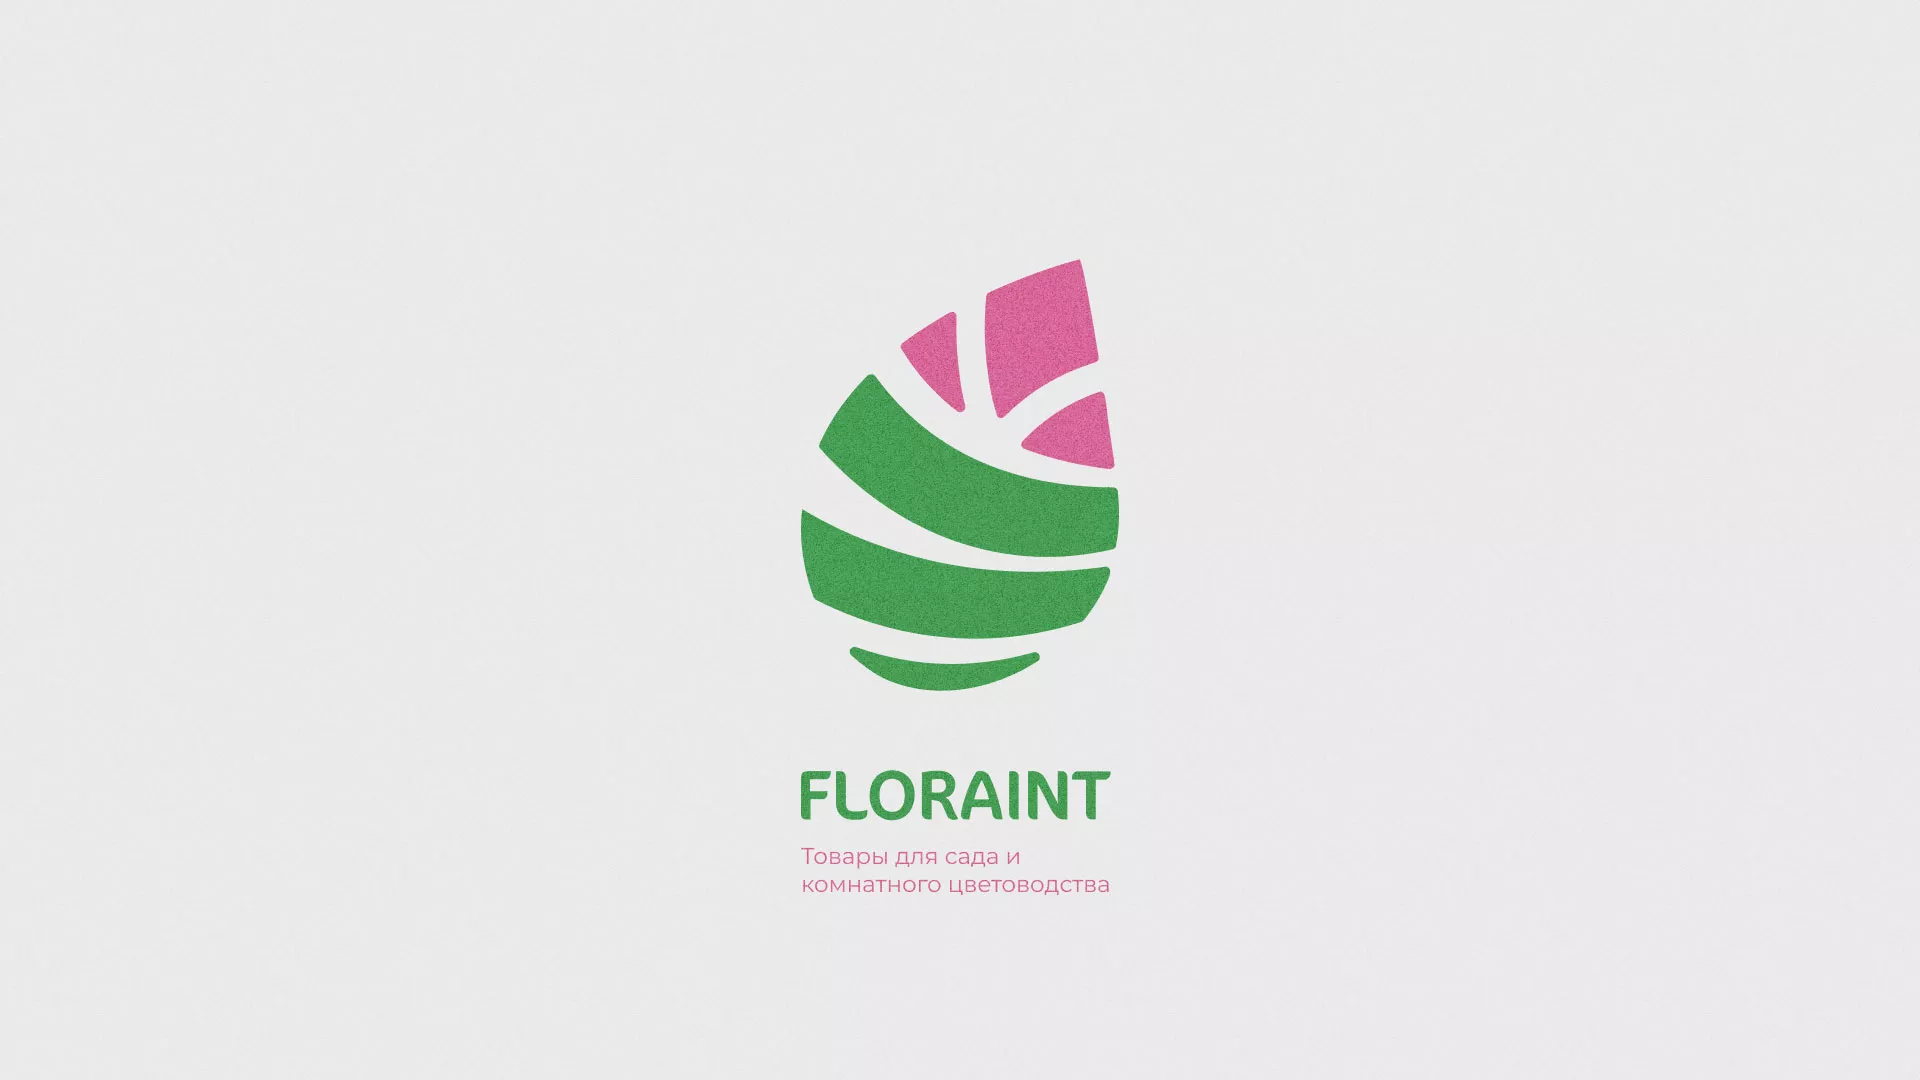 Разработка оформления профиля Instagram для магазина «Floraint» в Славянске-на-Кубани